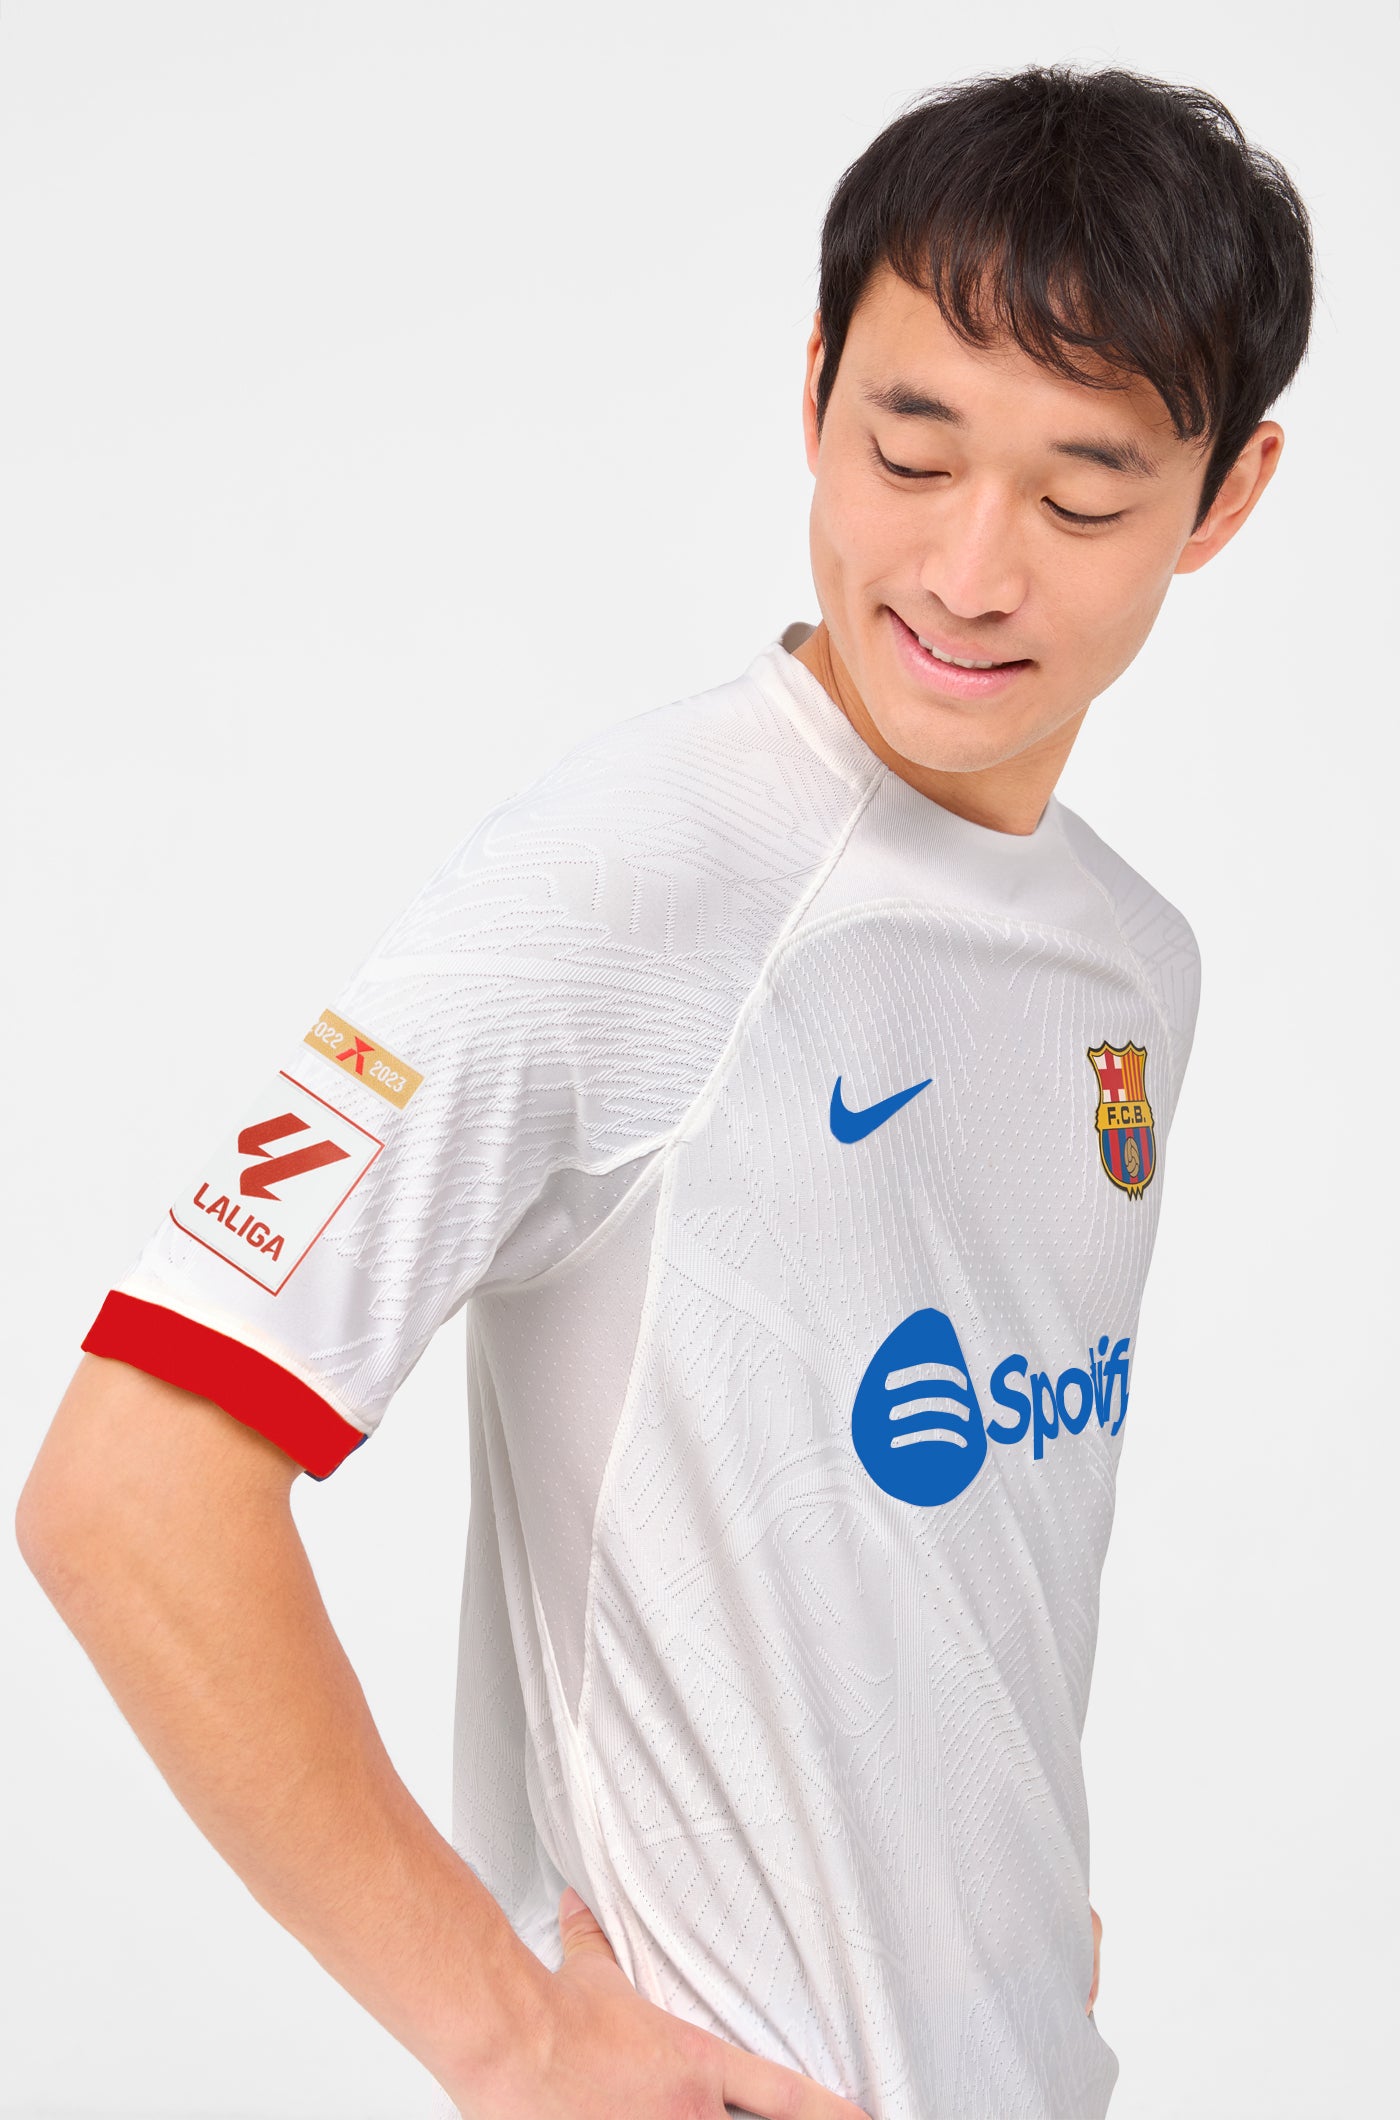 LFP FC Barcelona away shirt 23/24 Player’s Edition  - VITOR ROQUE